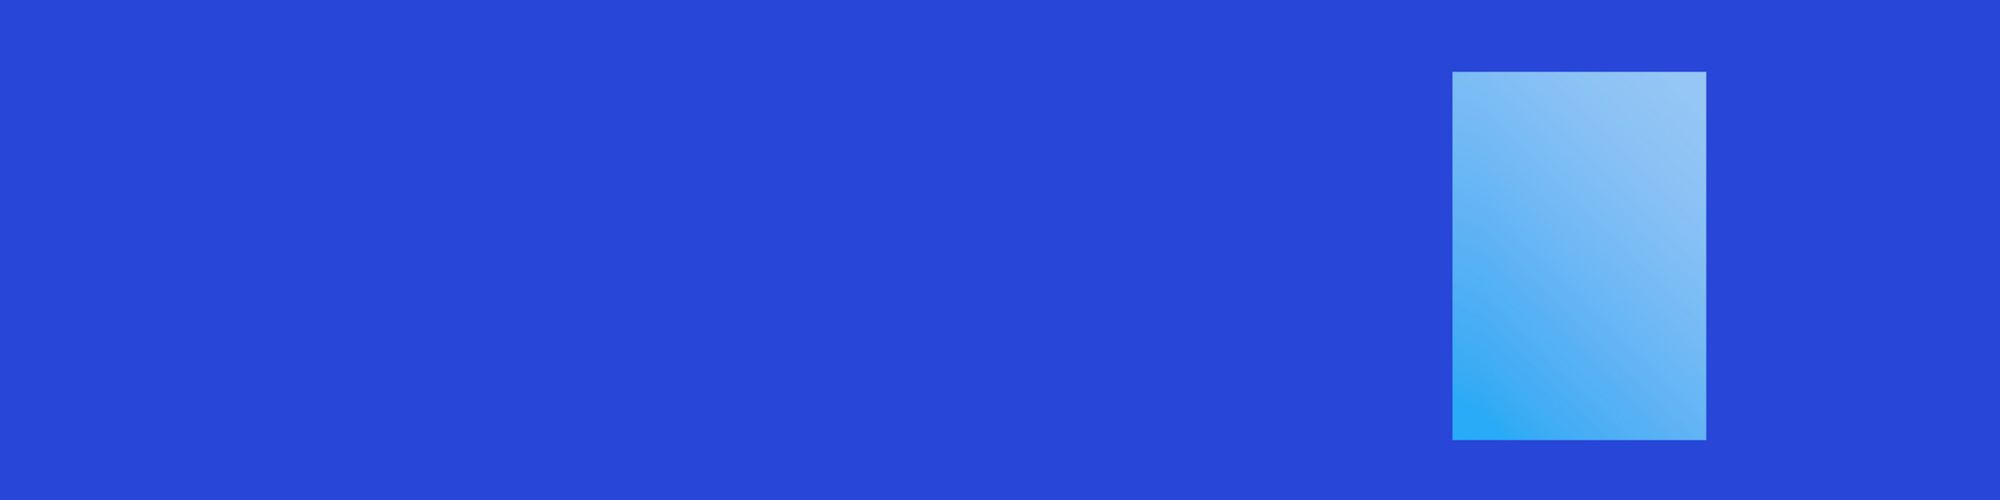 KPMG frame window with light blue to cobalt gradient